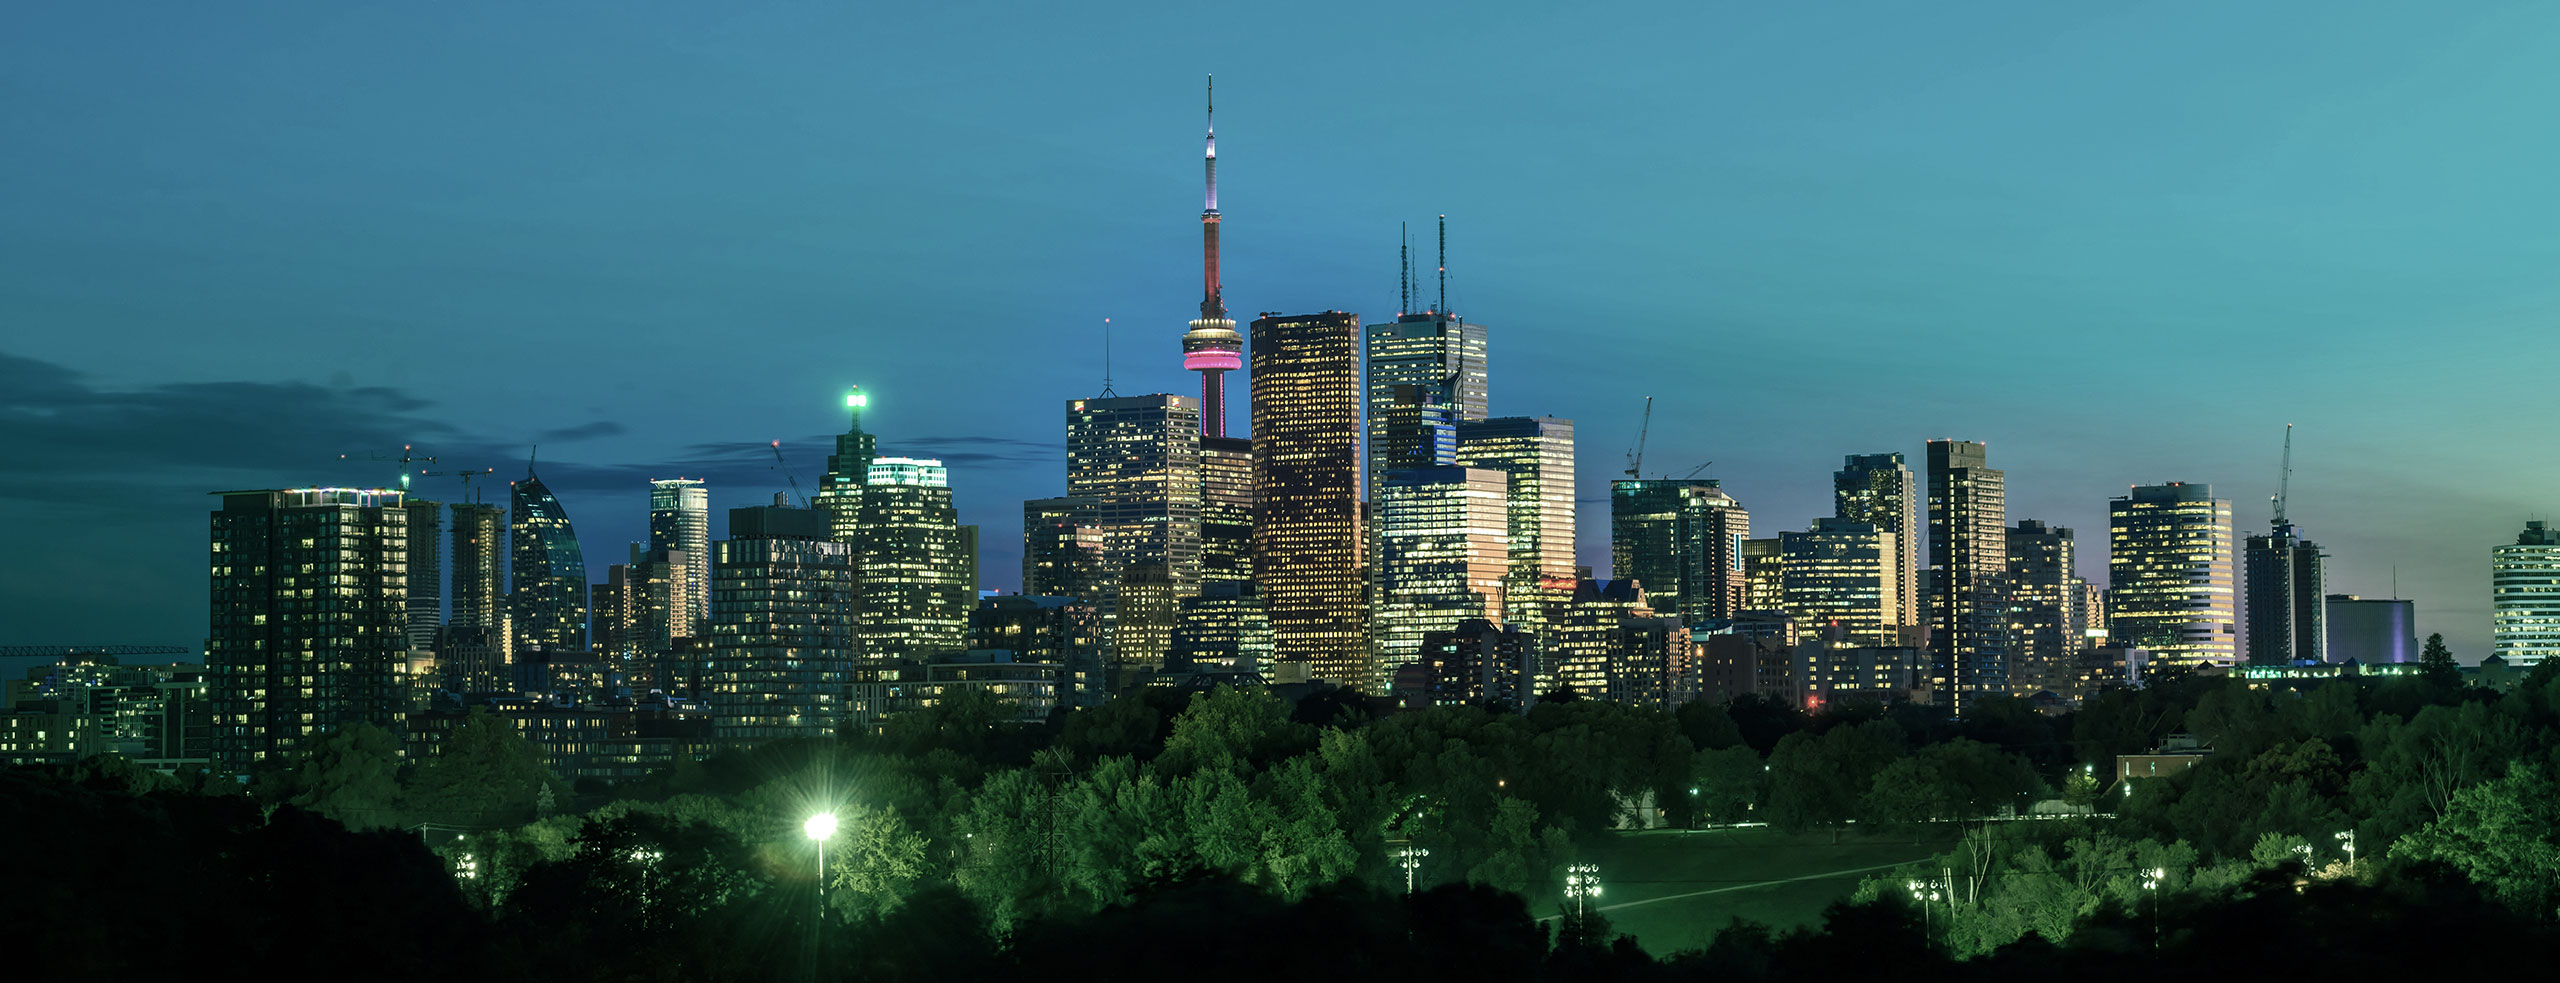 The city of Toronto, Ontario, Canada at night